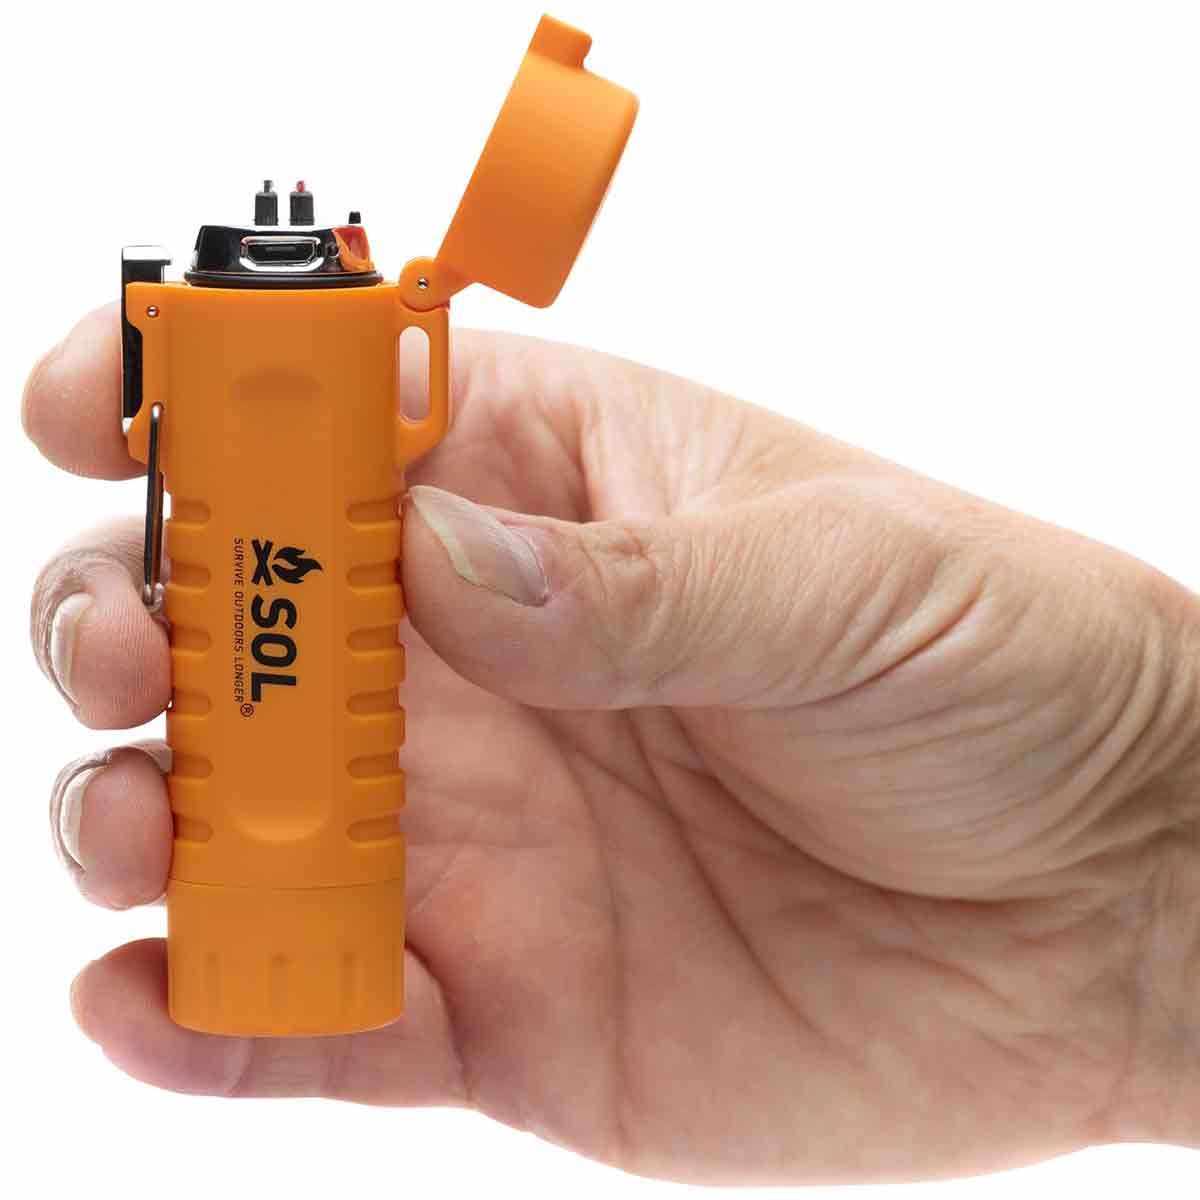 SOL Fuel-Free Plasma Lighter